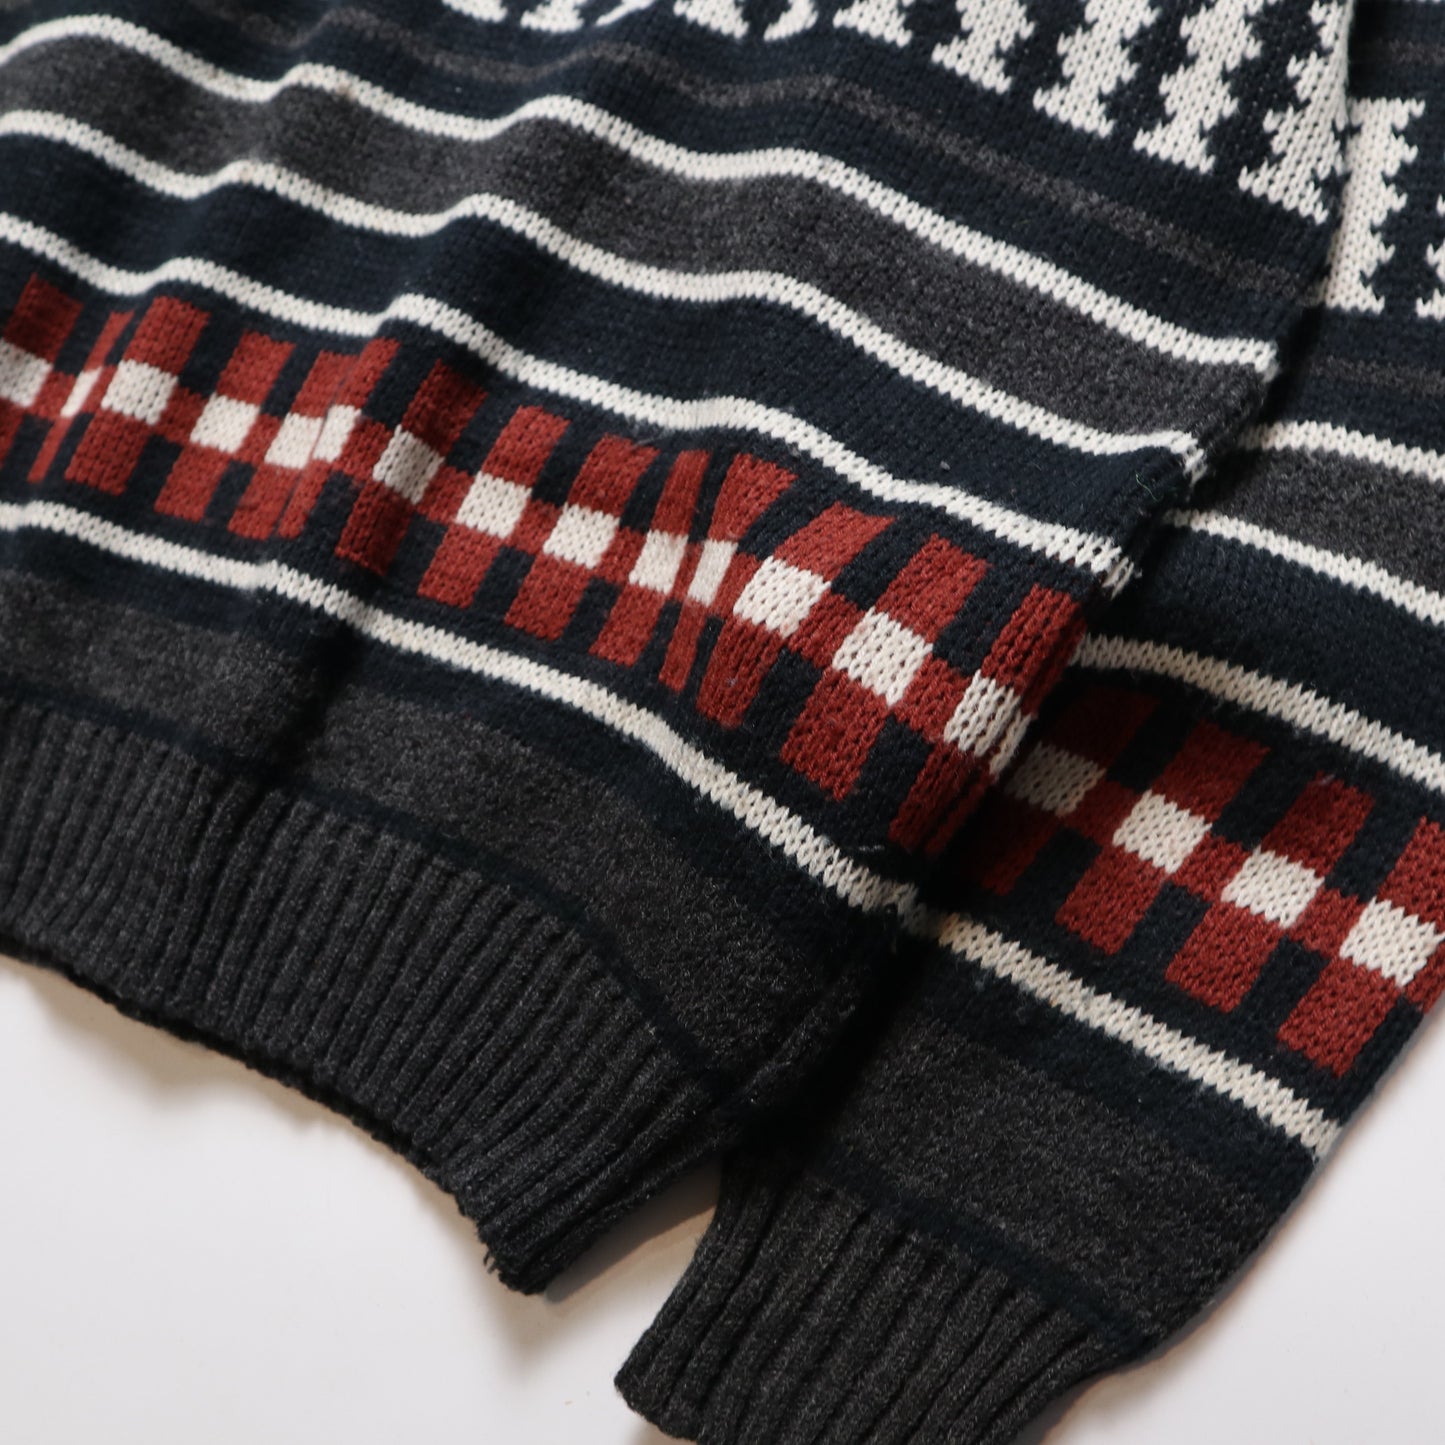 Gray Folklore Totem Knit Sweater